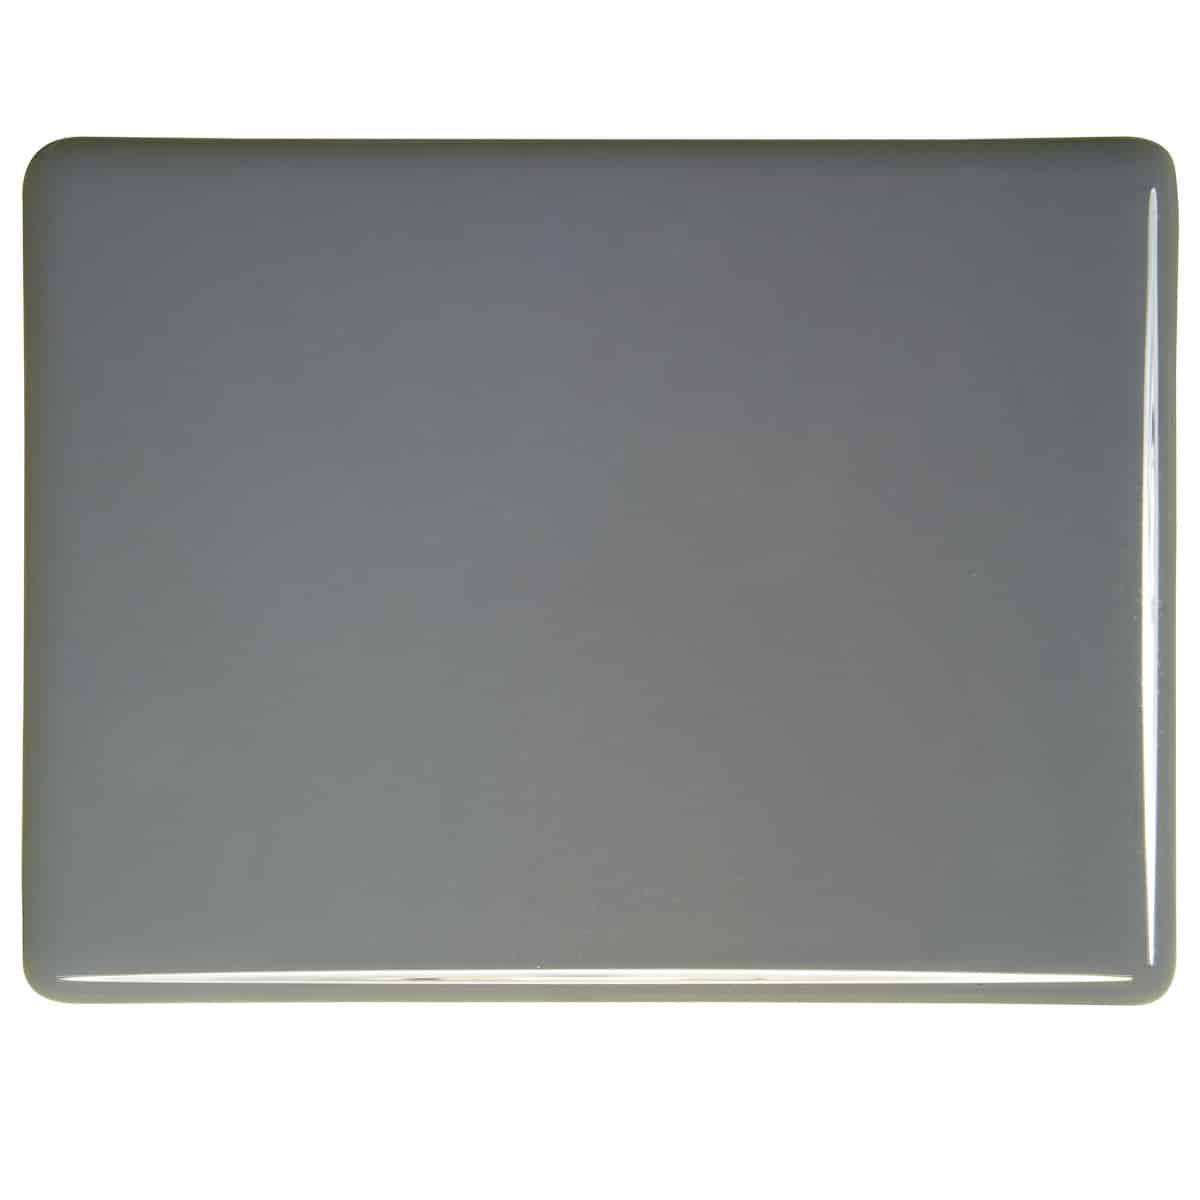 Deco Gray Opal sheet glass swatch